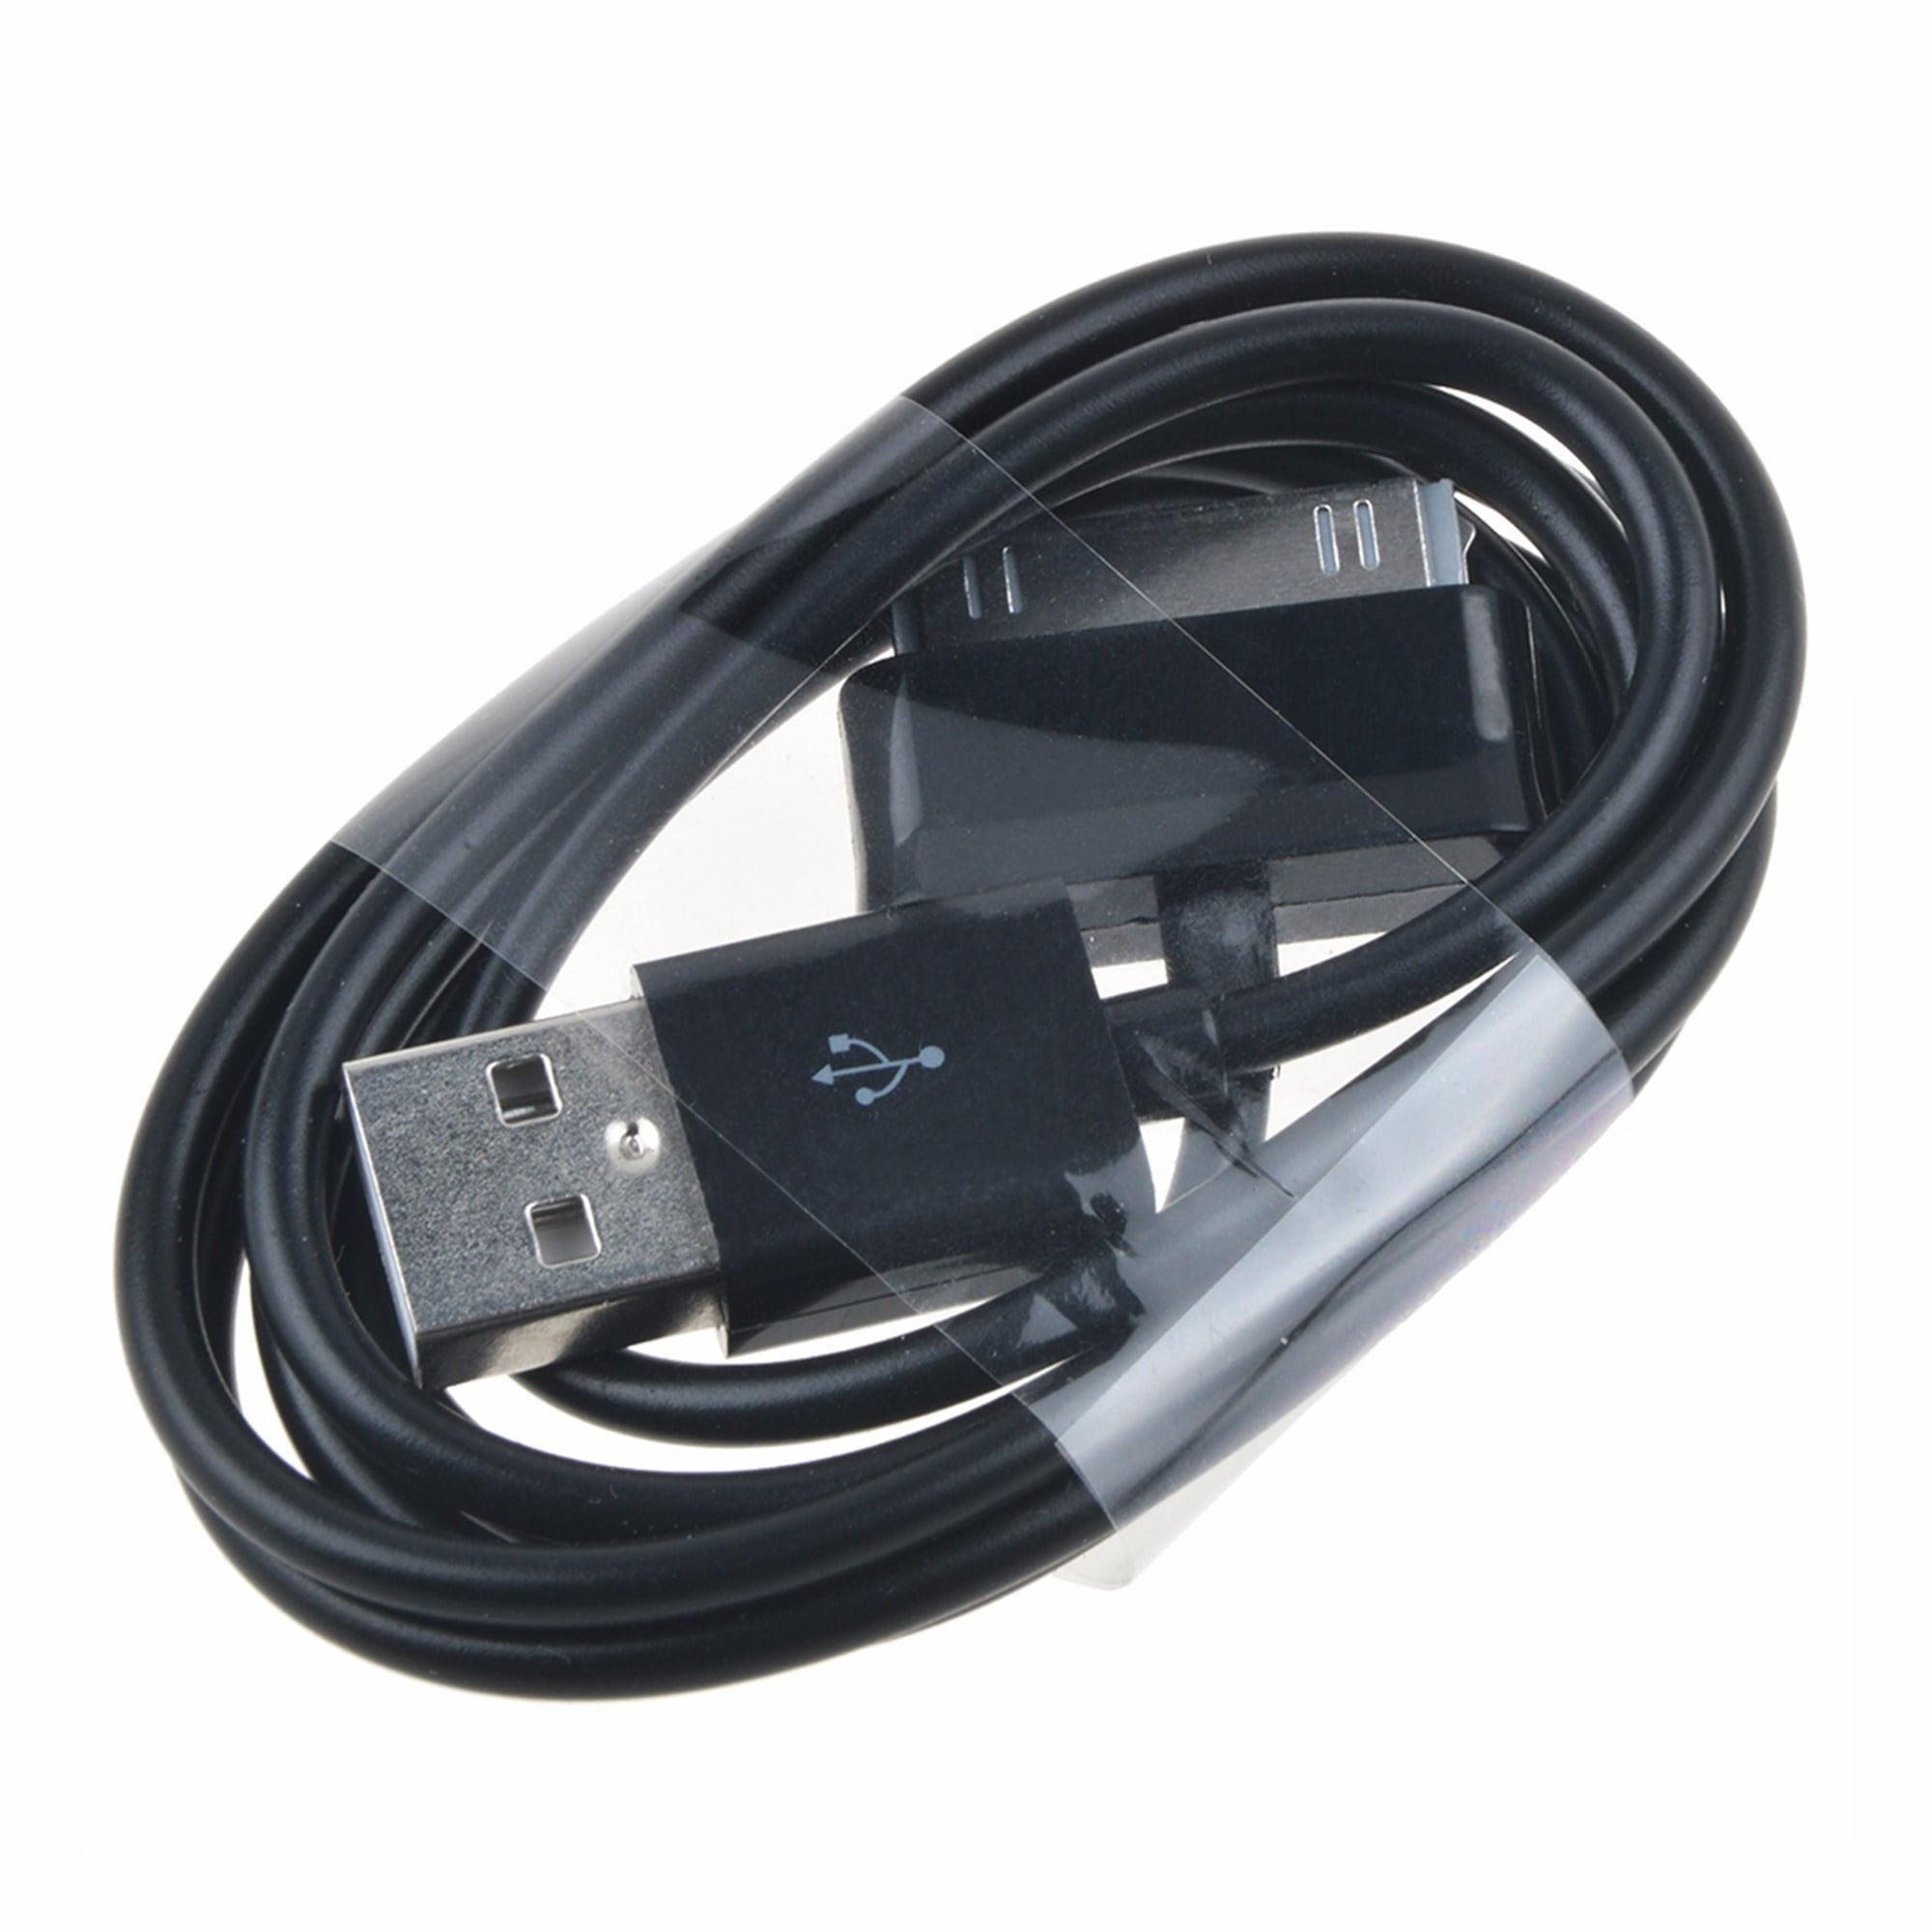 Cable d'origine Samsung pour Galaxy TAB 2 10.1 GT-P5110 (synchro - charge)  ECC1DP0UBE